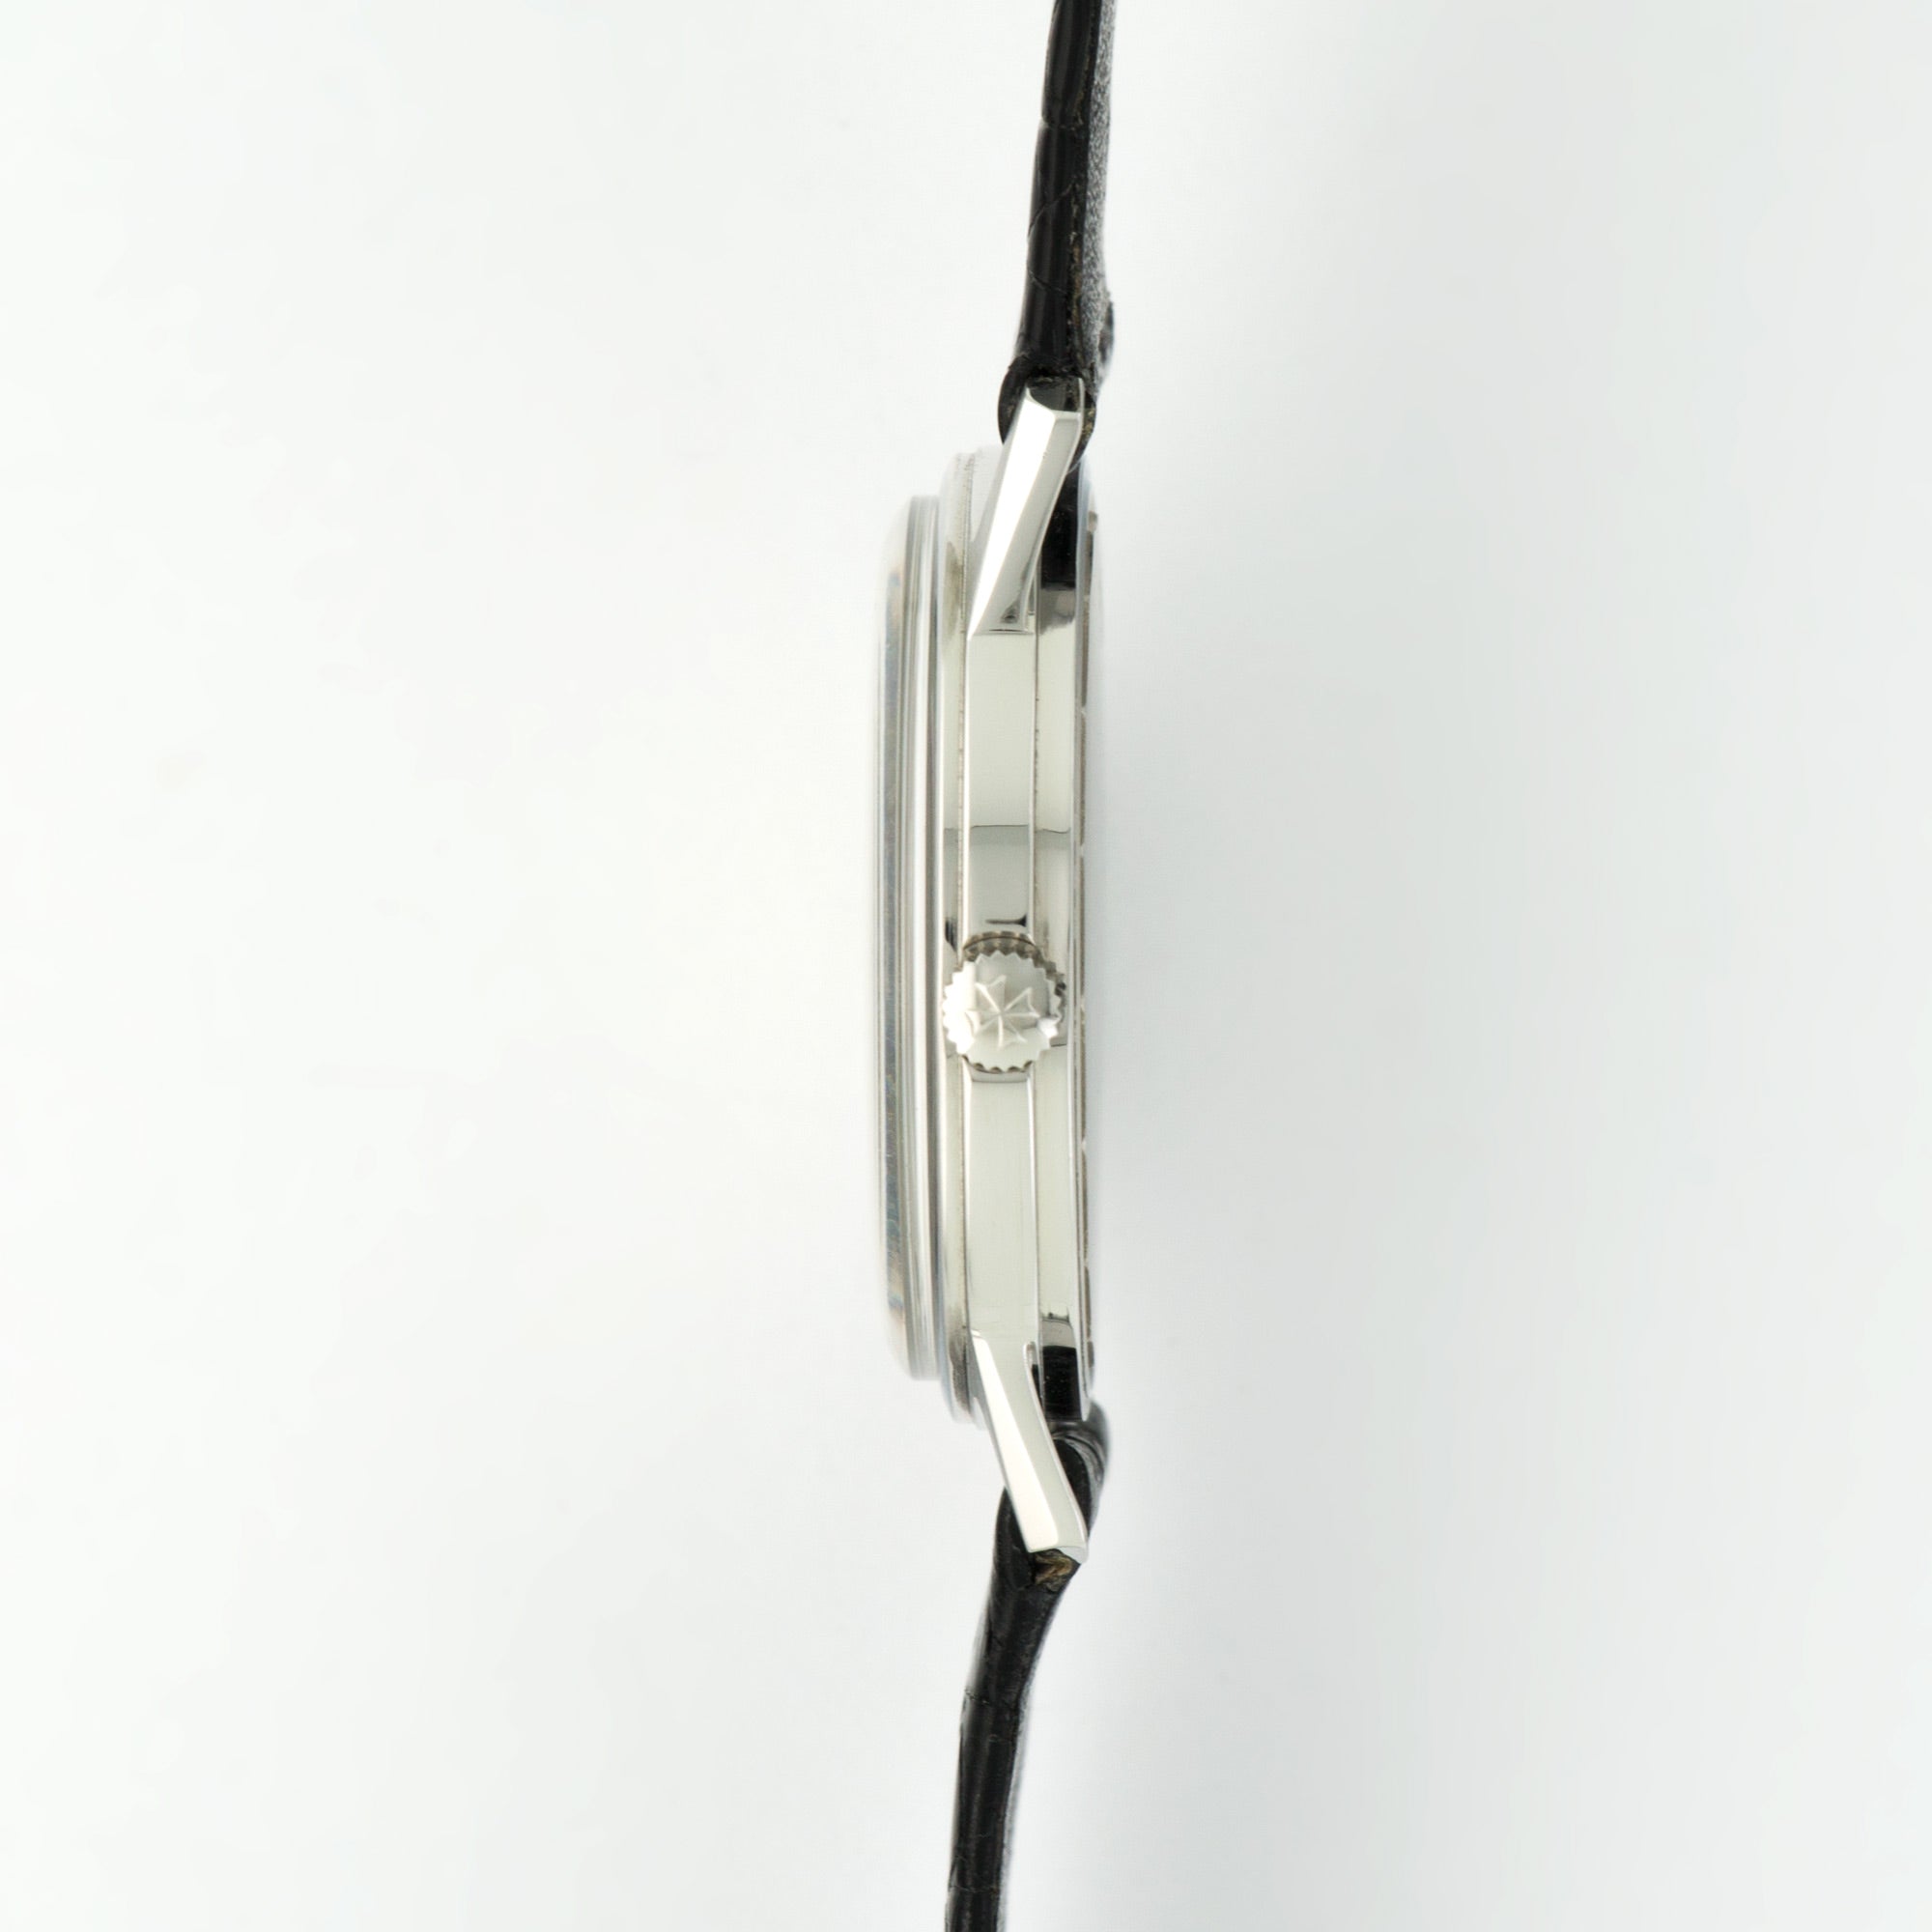 Vacheron Constantin - Vacheron Constantin Stainless Steel Automatic Strap Watch Ref. 7592 - The Keystone Watches